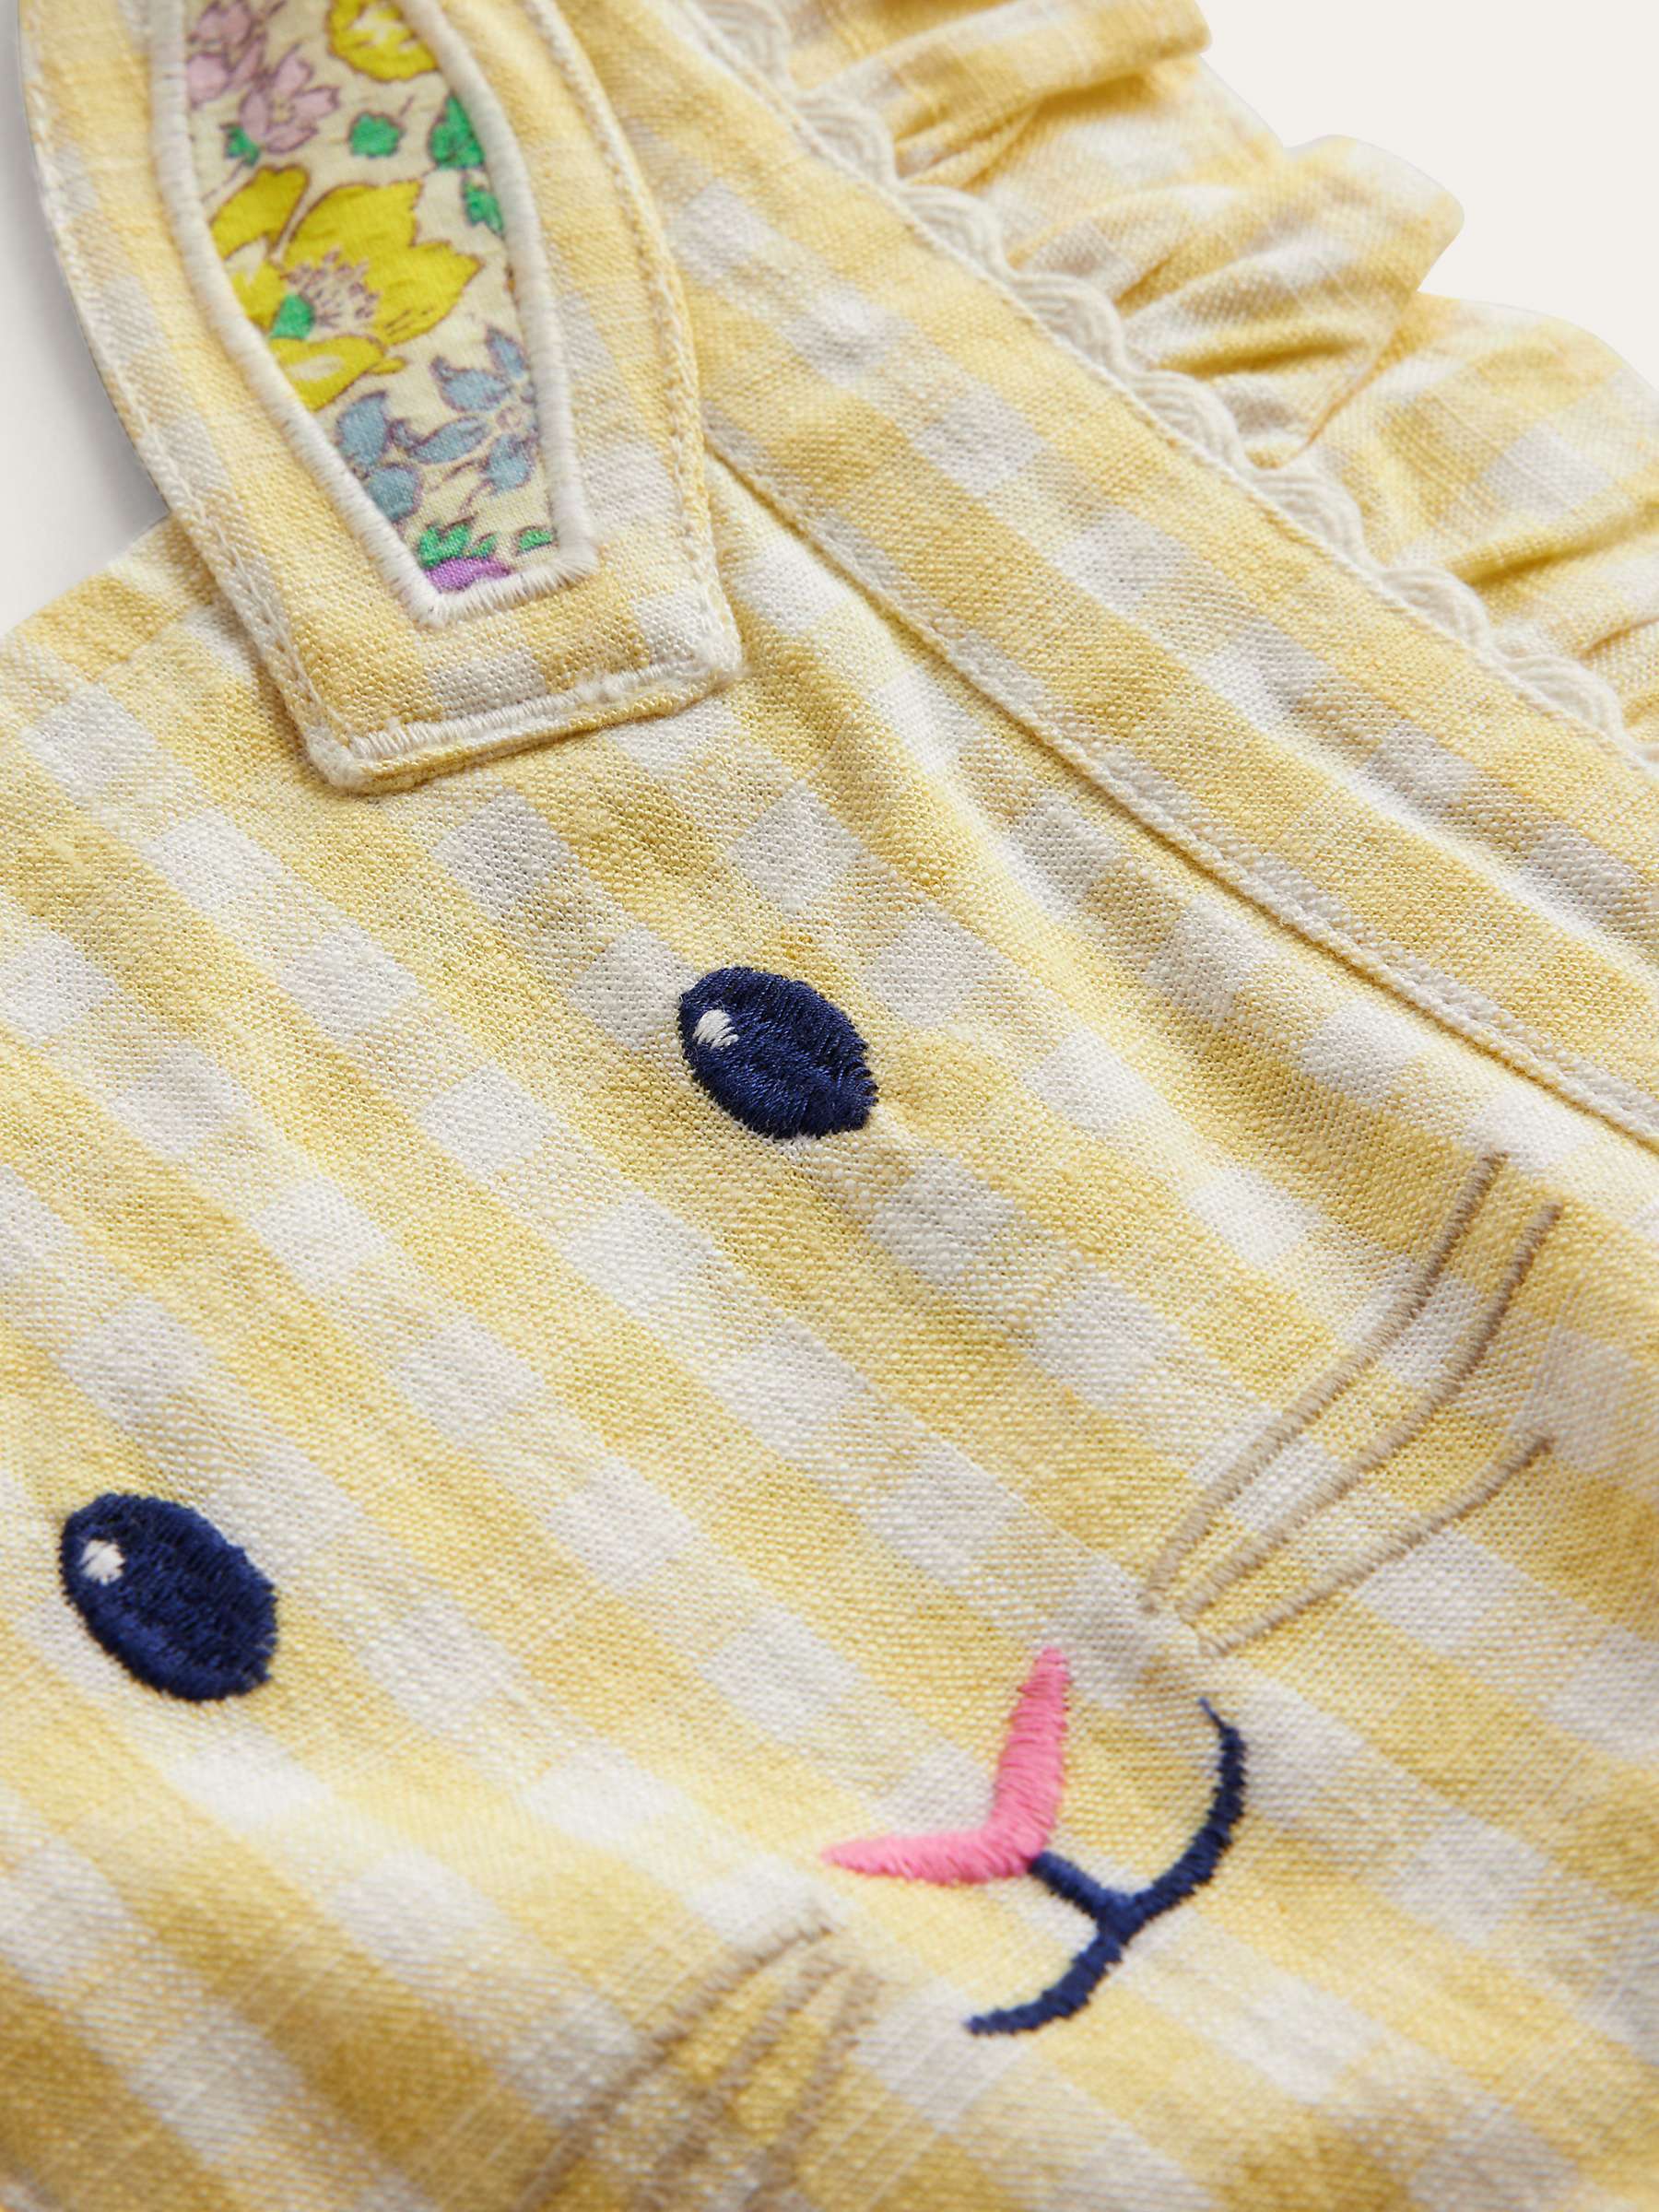 Buy Mini Boden Kids' Charming Bunny Pinafore Dress, Honey/Ivory Online at johnlewis.com